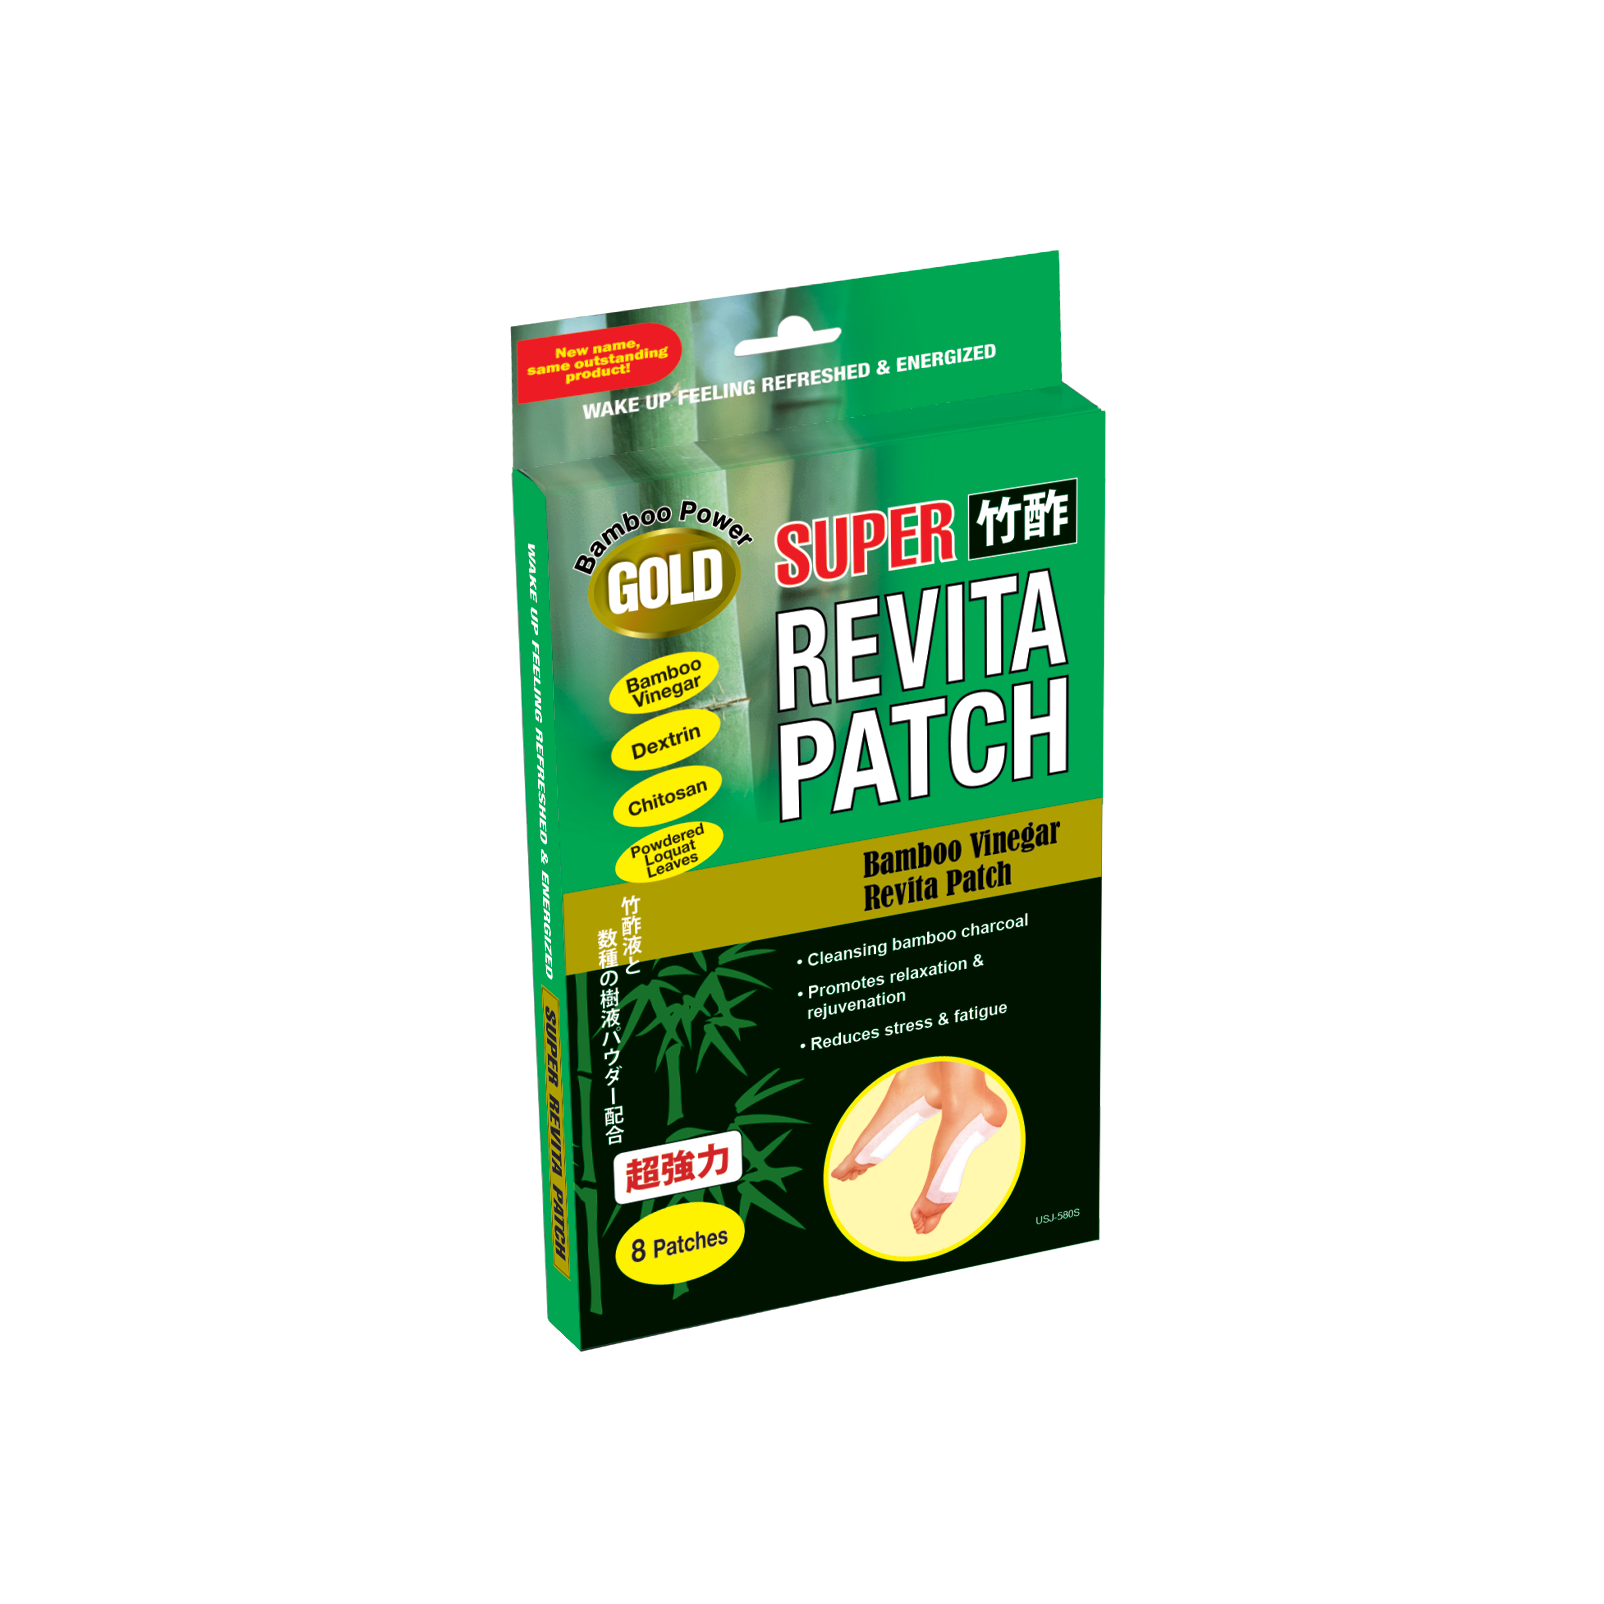 Revita Patch Gold USJ-508 Bamboo Vinegar - Feeling Refreshed & Energized